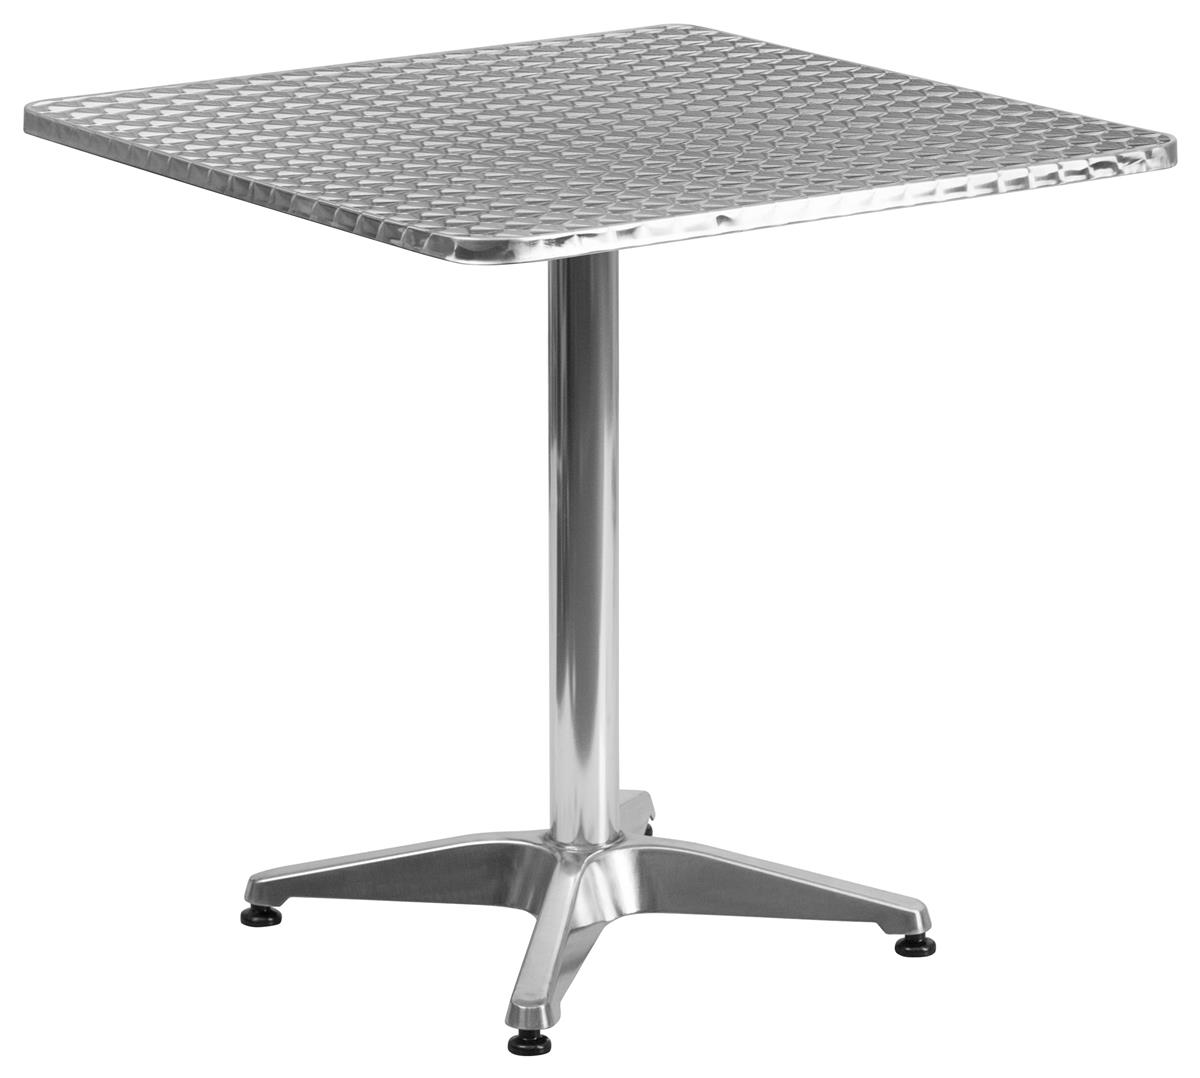 Commercial Aluminum Bistro Furniture, Aluminum Bistro Table Chair Set